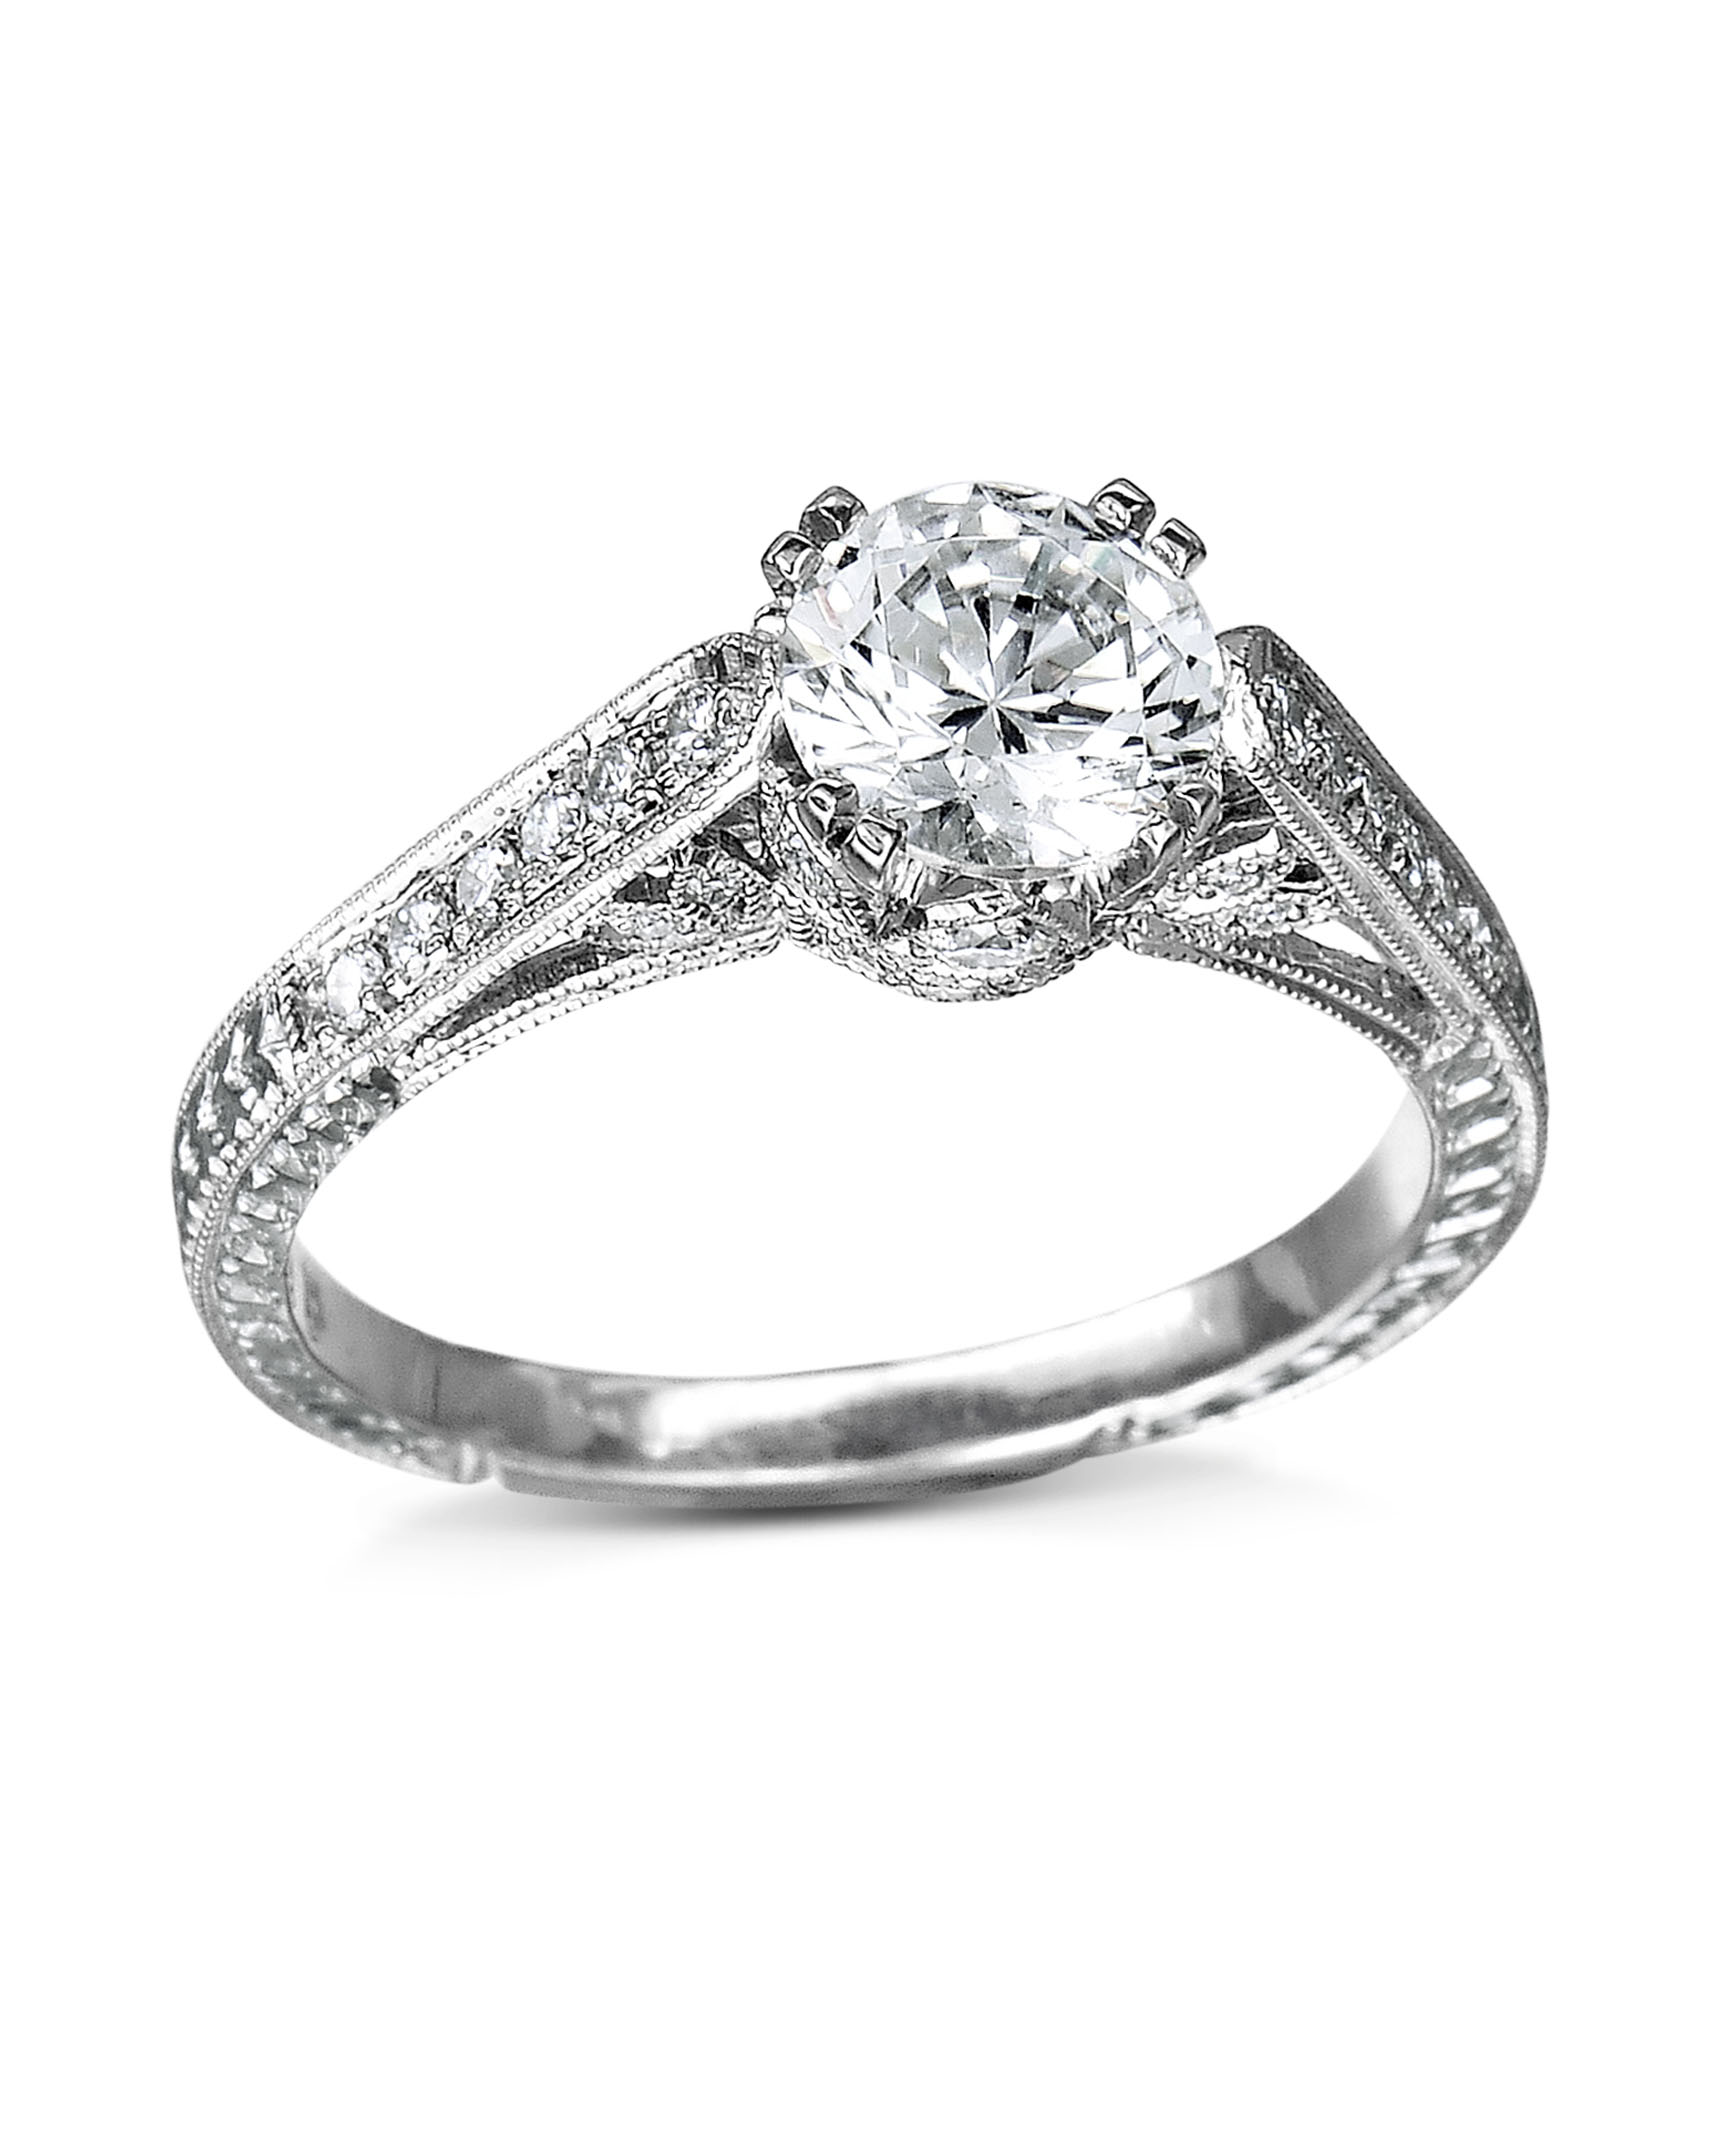 Antique Style Diamond Ring - Turgeon Raine